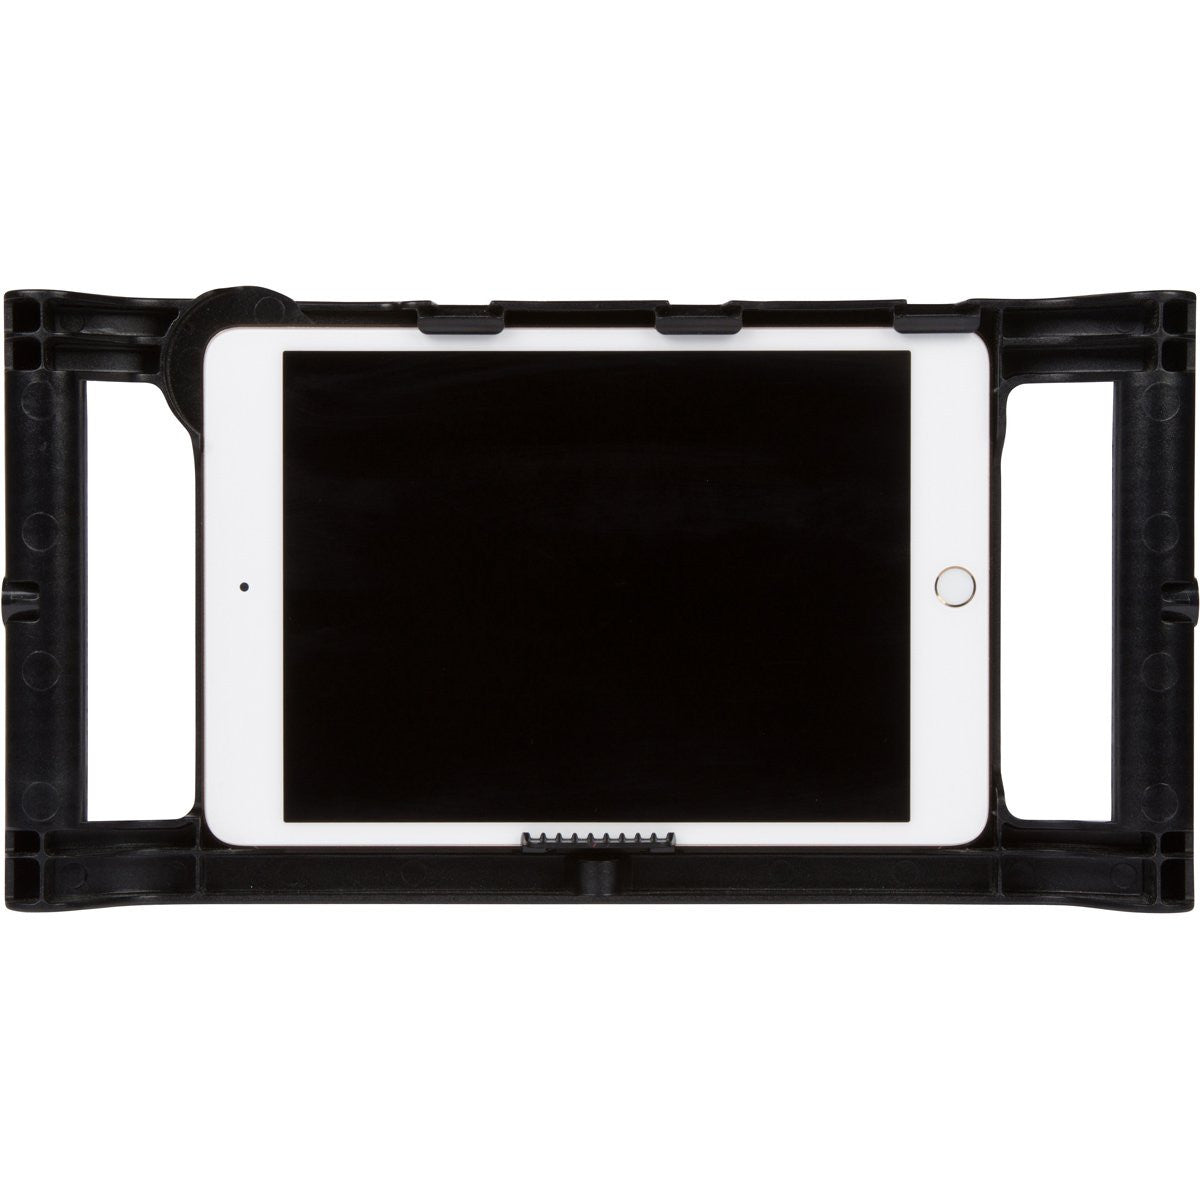 iOgrapher Filmmaking Case for iPad 9.7 - Fits iPad Air 1 & 2